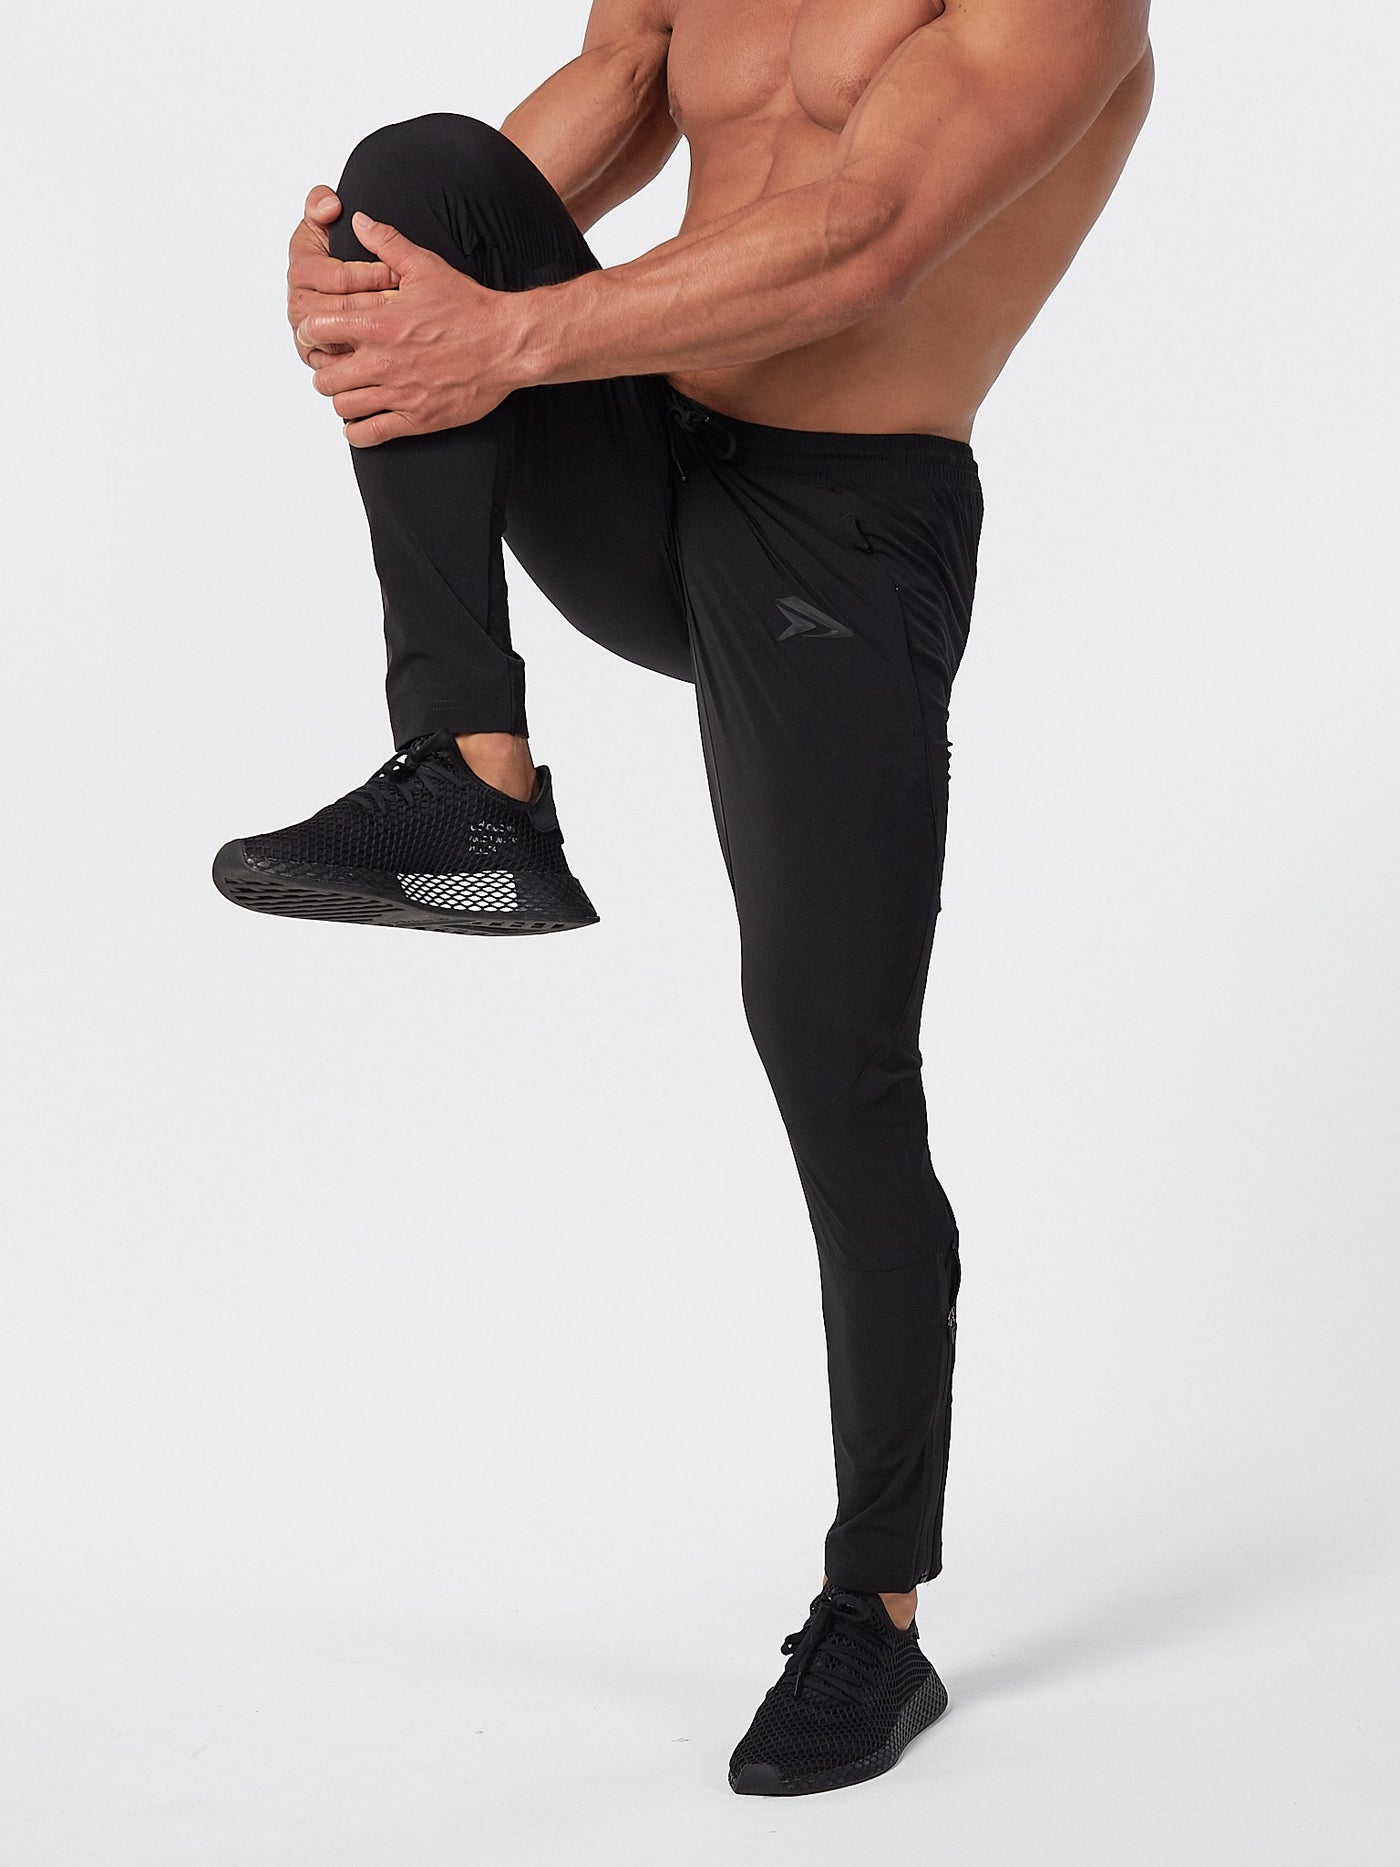 Buy GymX - Women's Splash Blue Sportswear Running Yoga Comfort Leggings  (Polyester, Small, s) at Amazon.in